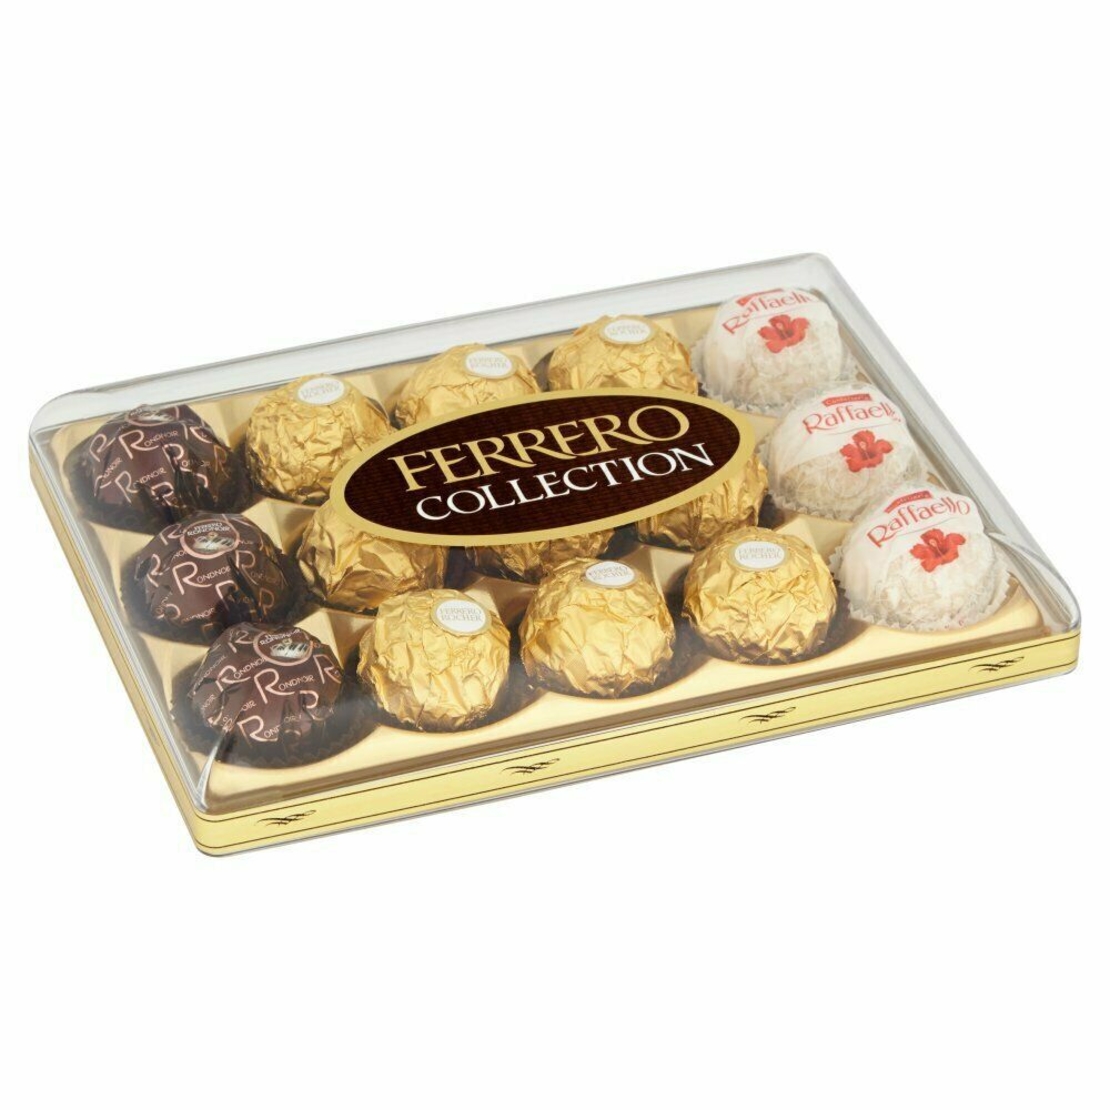 Ferrero Collection Standard Edition